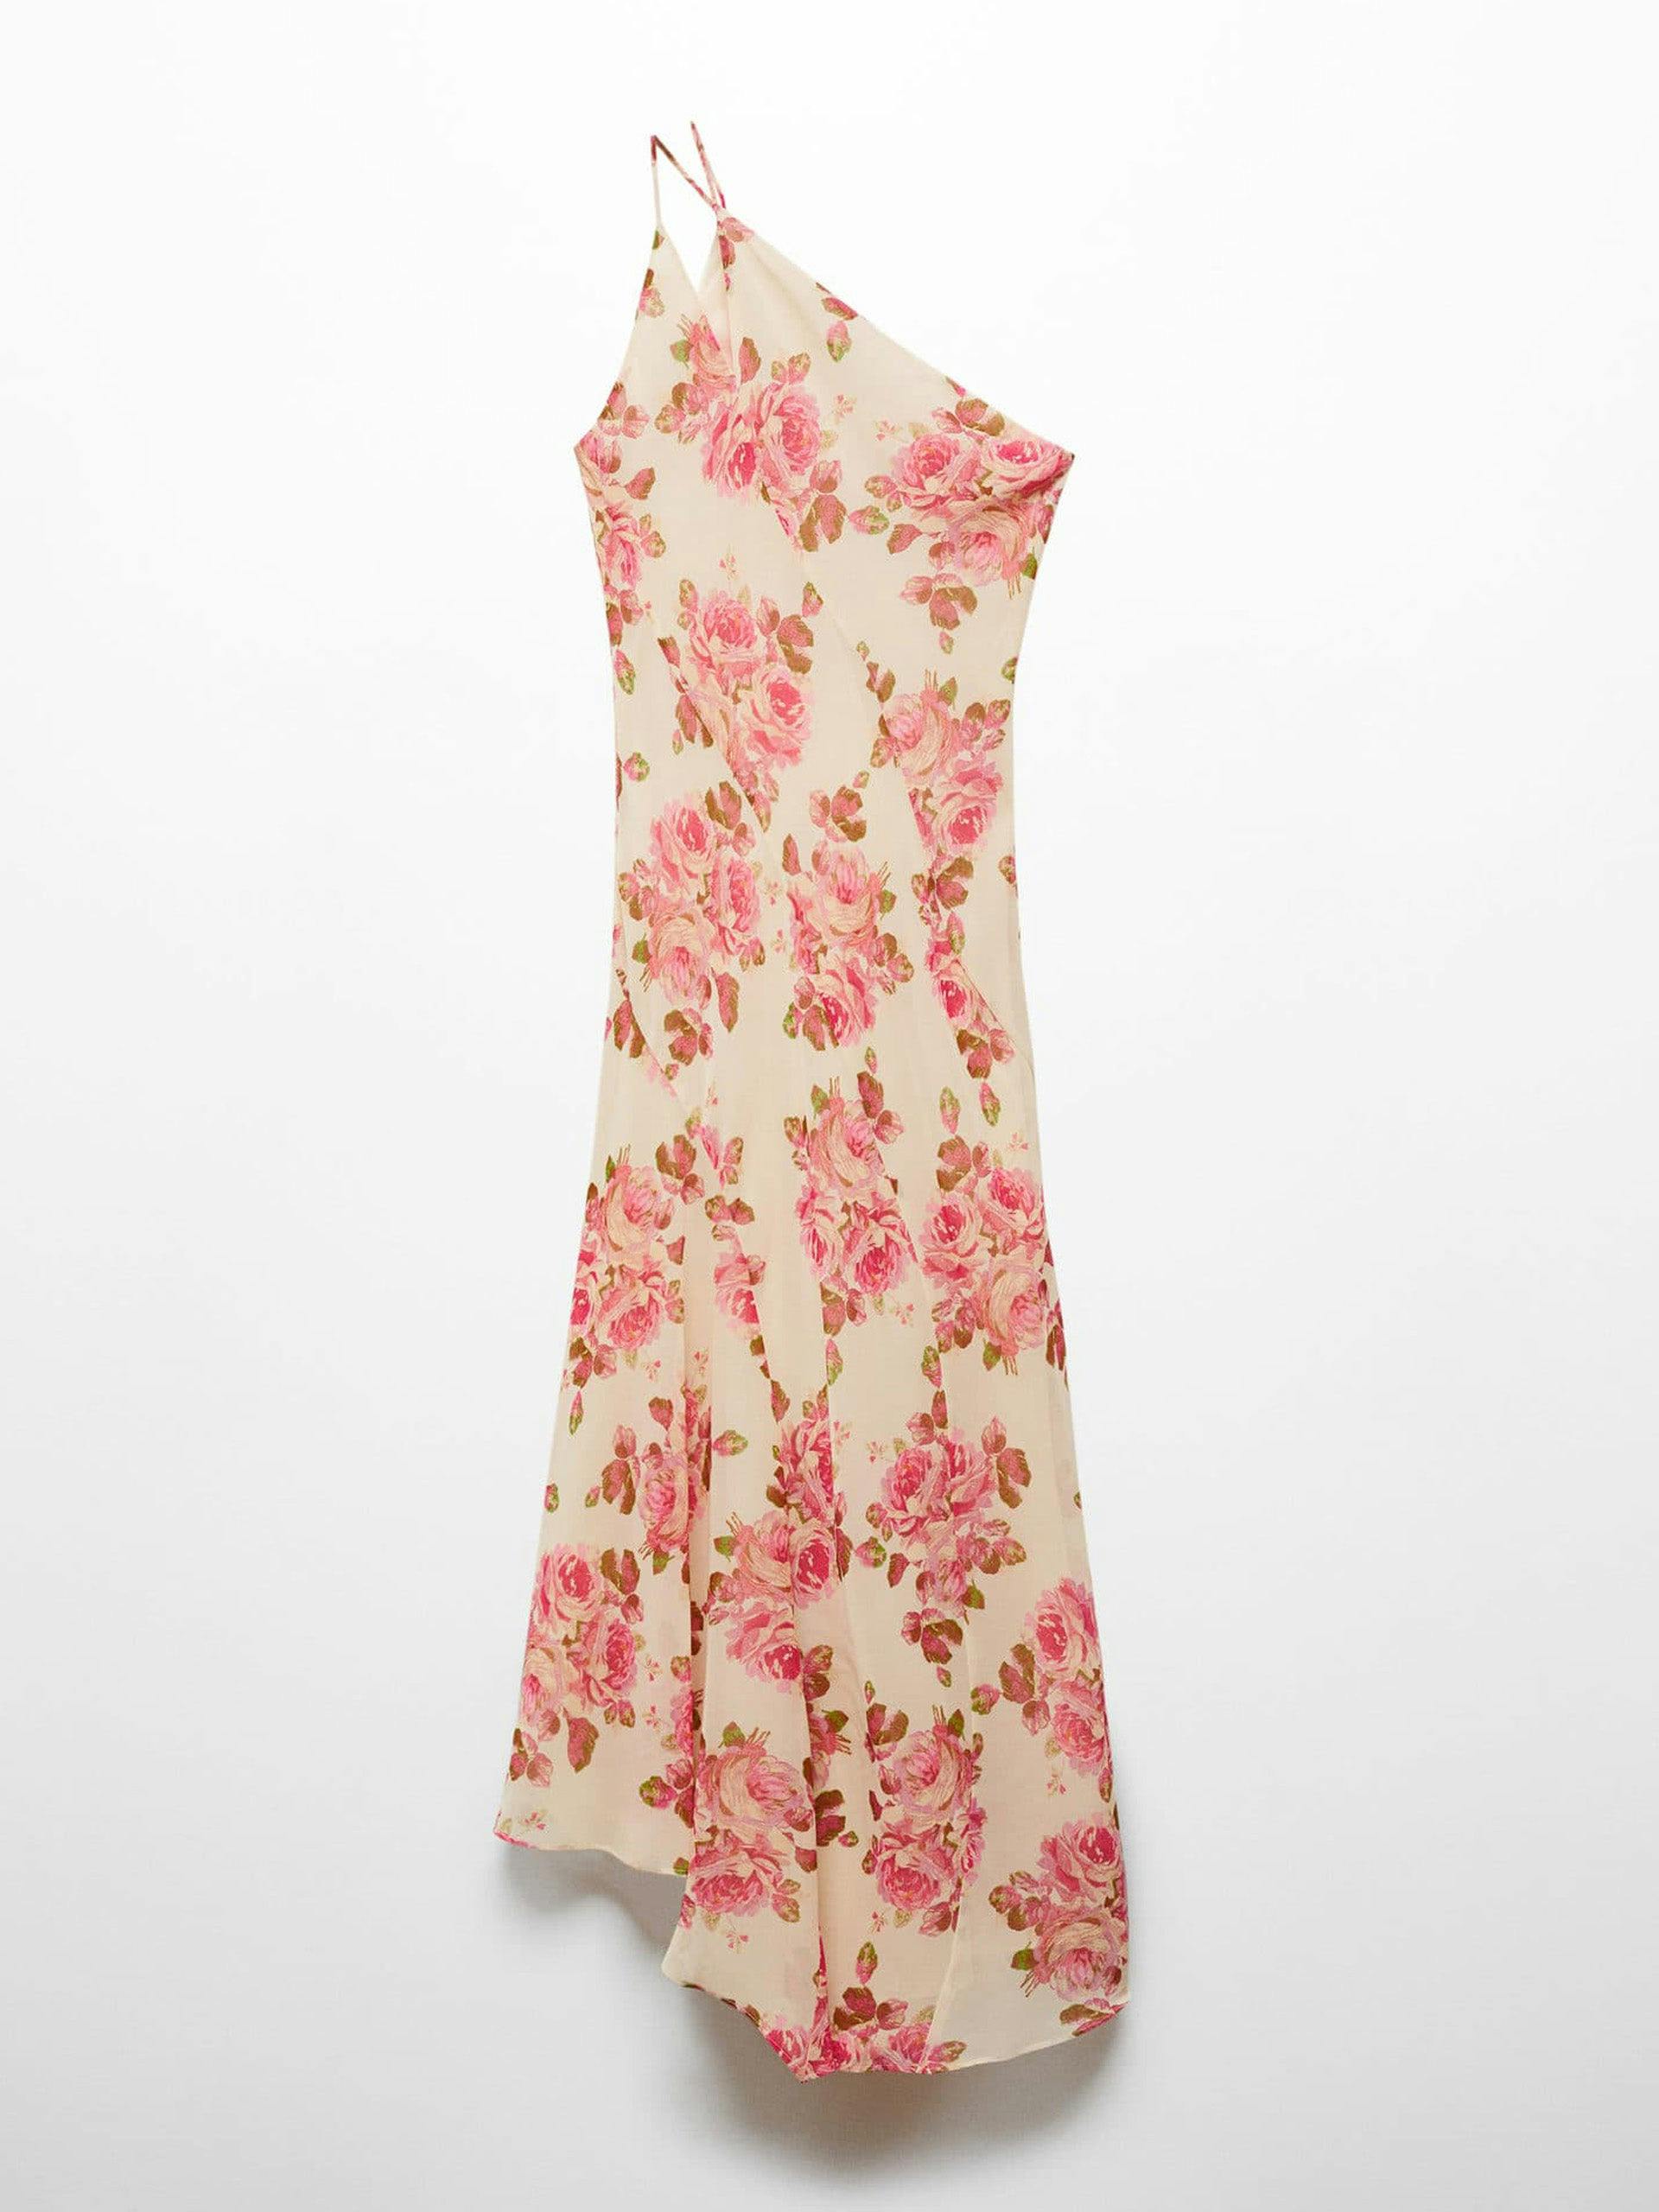 Asymmetric floral dress